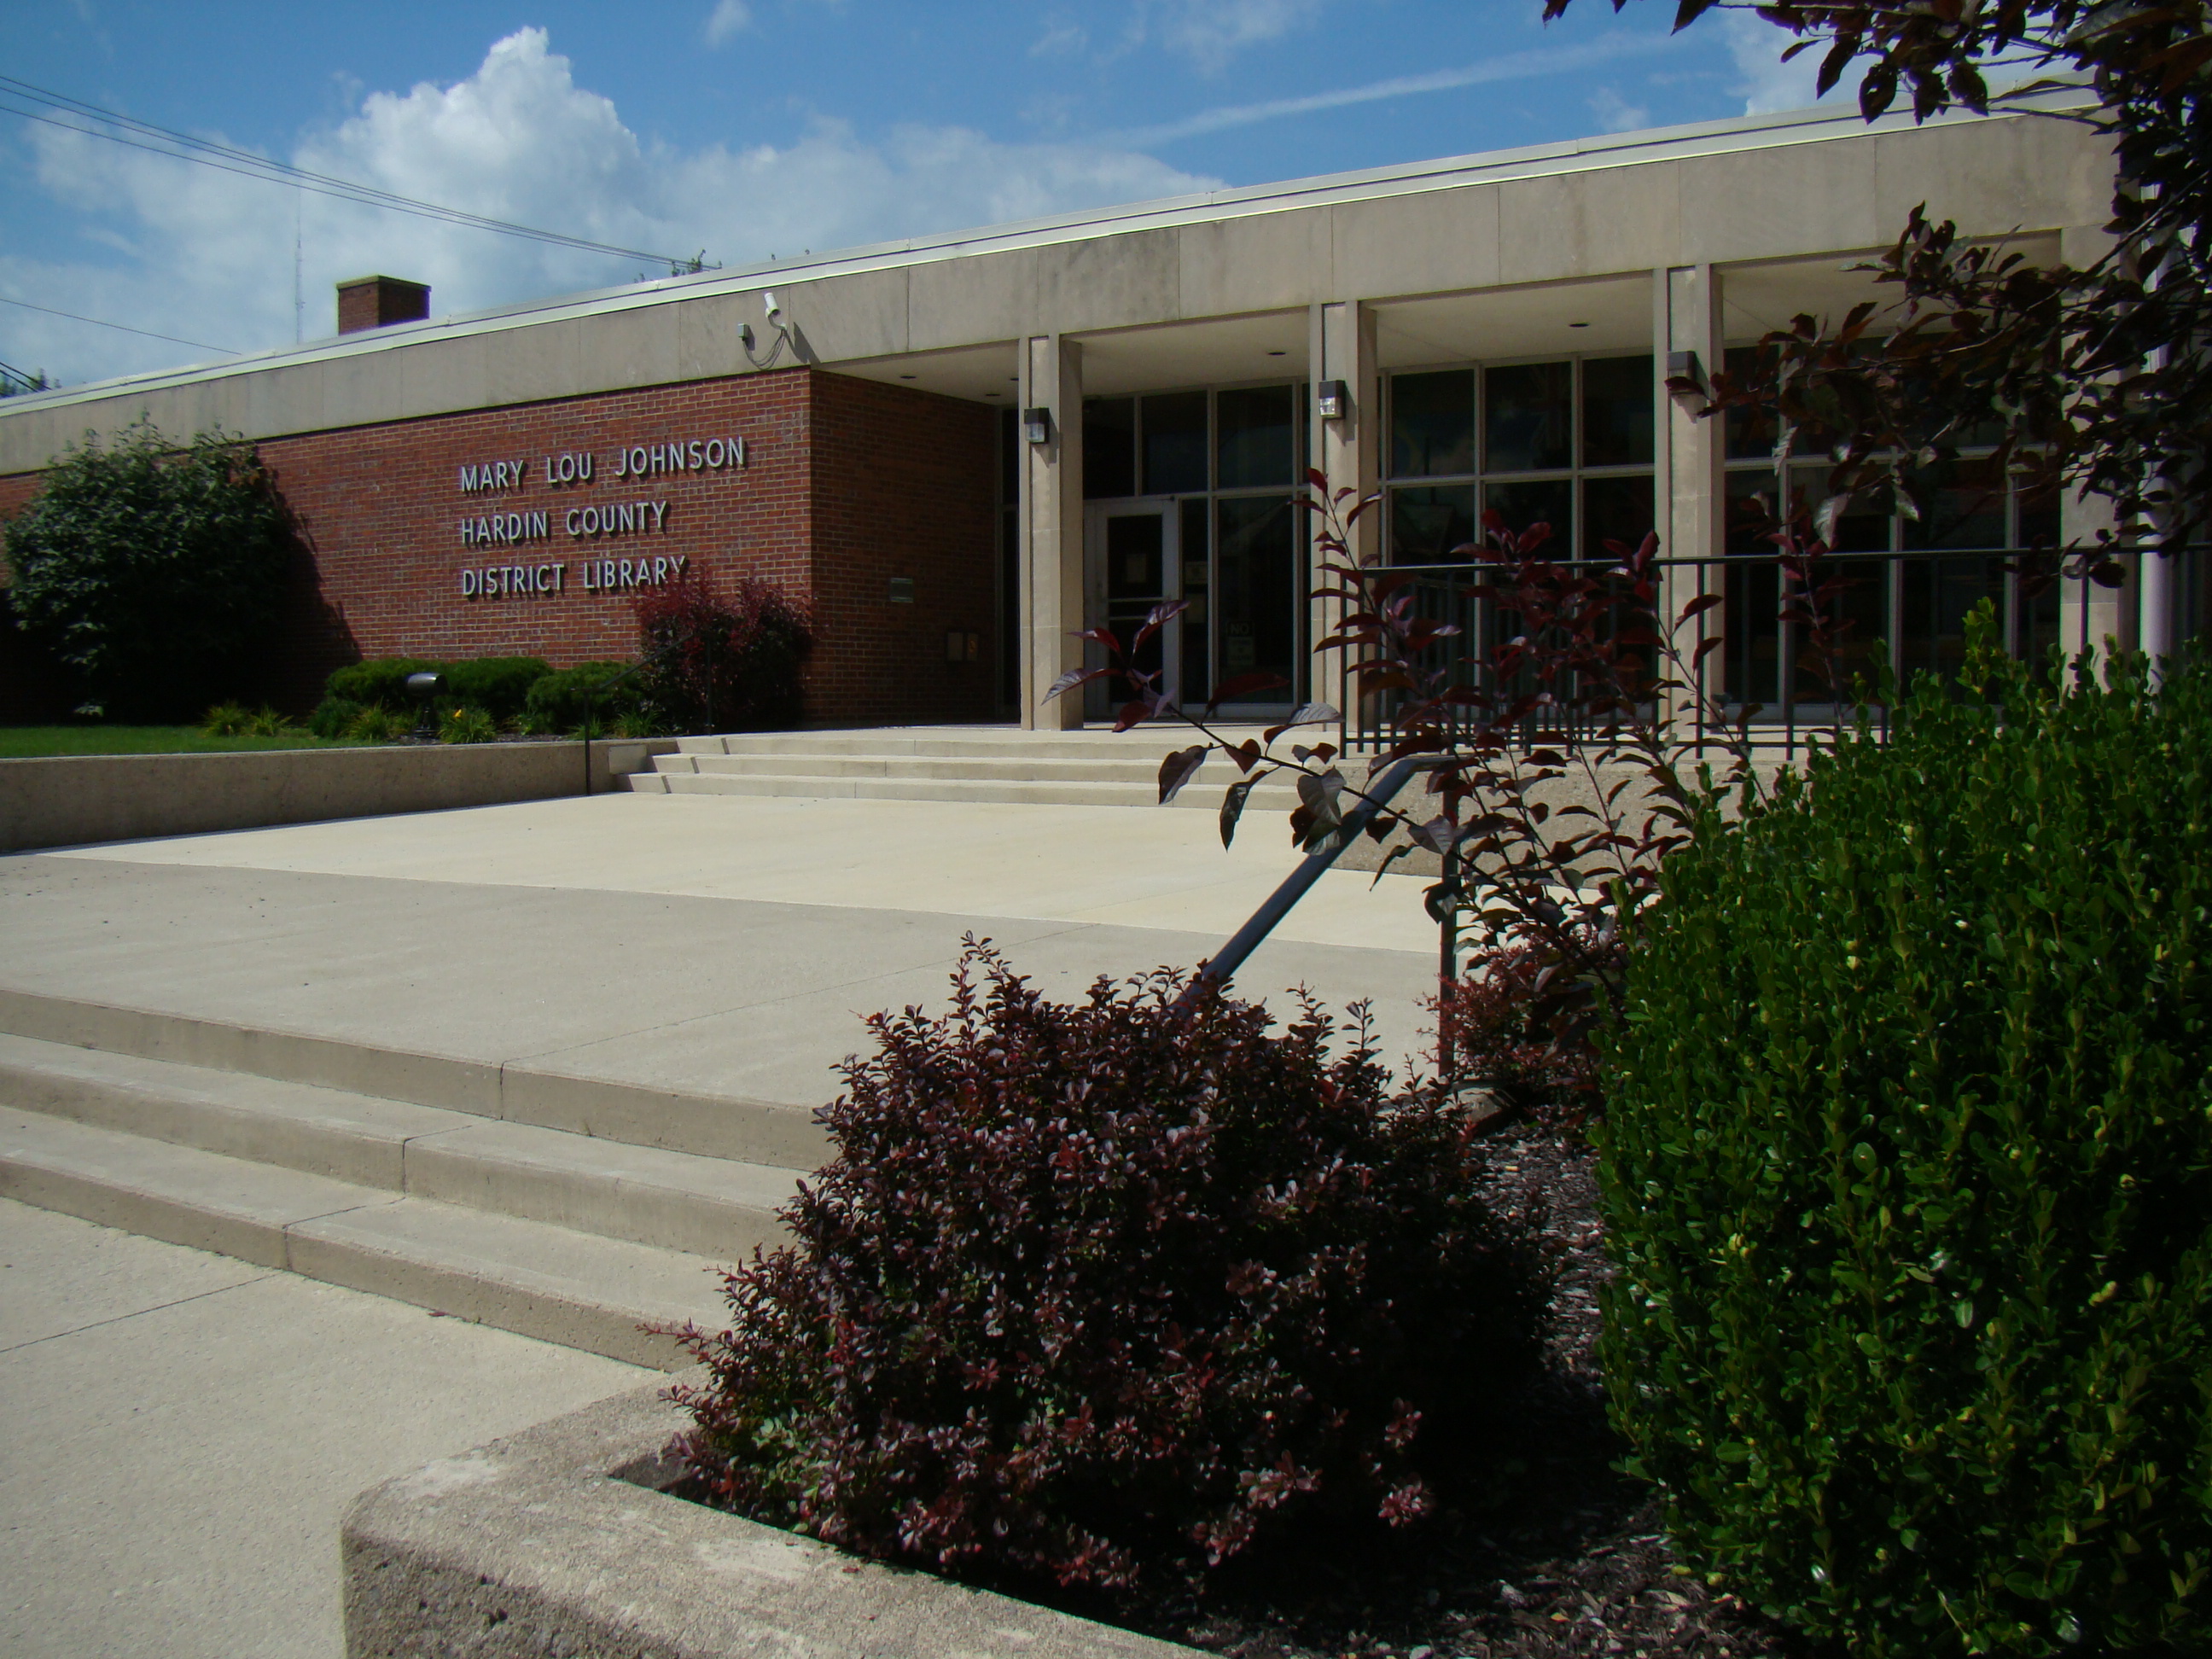 Mary Lou Johnson / Hardin County District Library main entrance